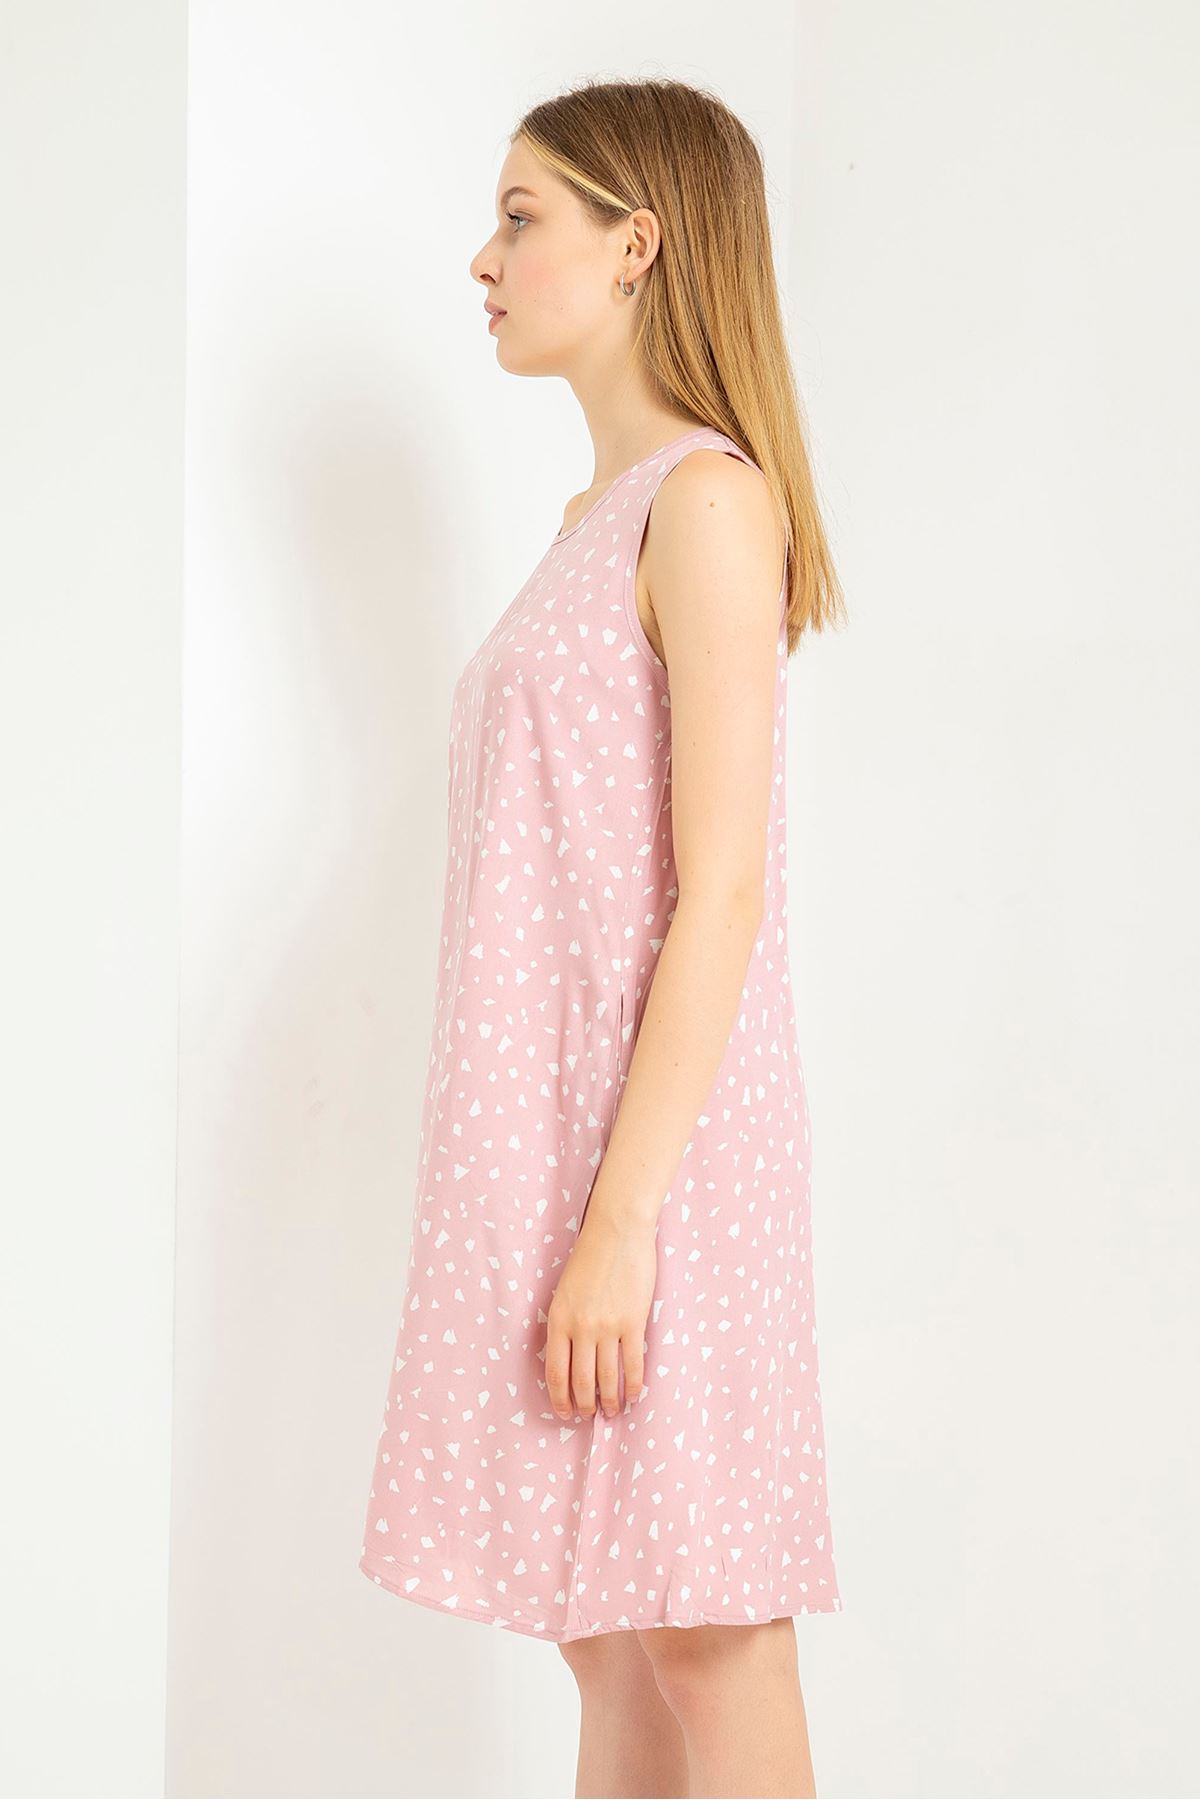 Viscose Fabric Sleeveless Round Full Fit Crispy Print Women Dress - Light Pink